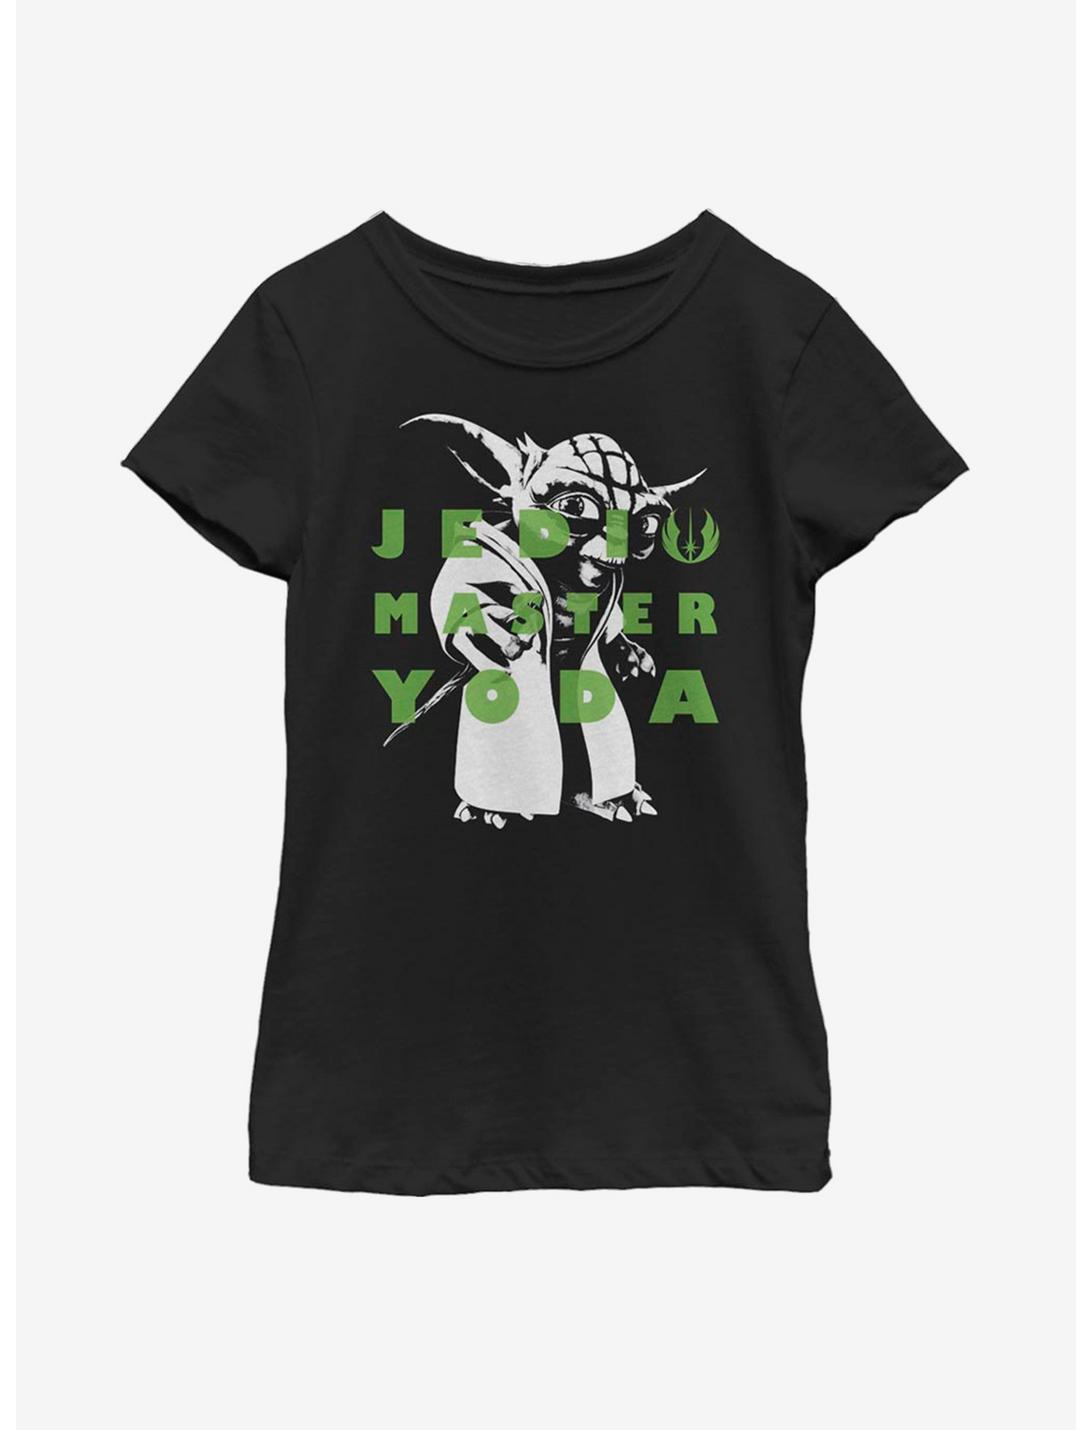 Plus Size Star Wars: The Clone Wars Yoda Text Youth Girls T-Shirt, BLACK, hi-res